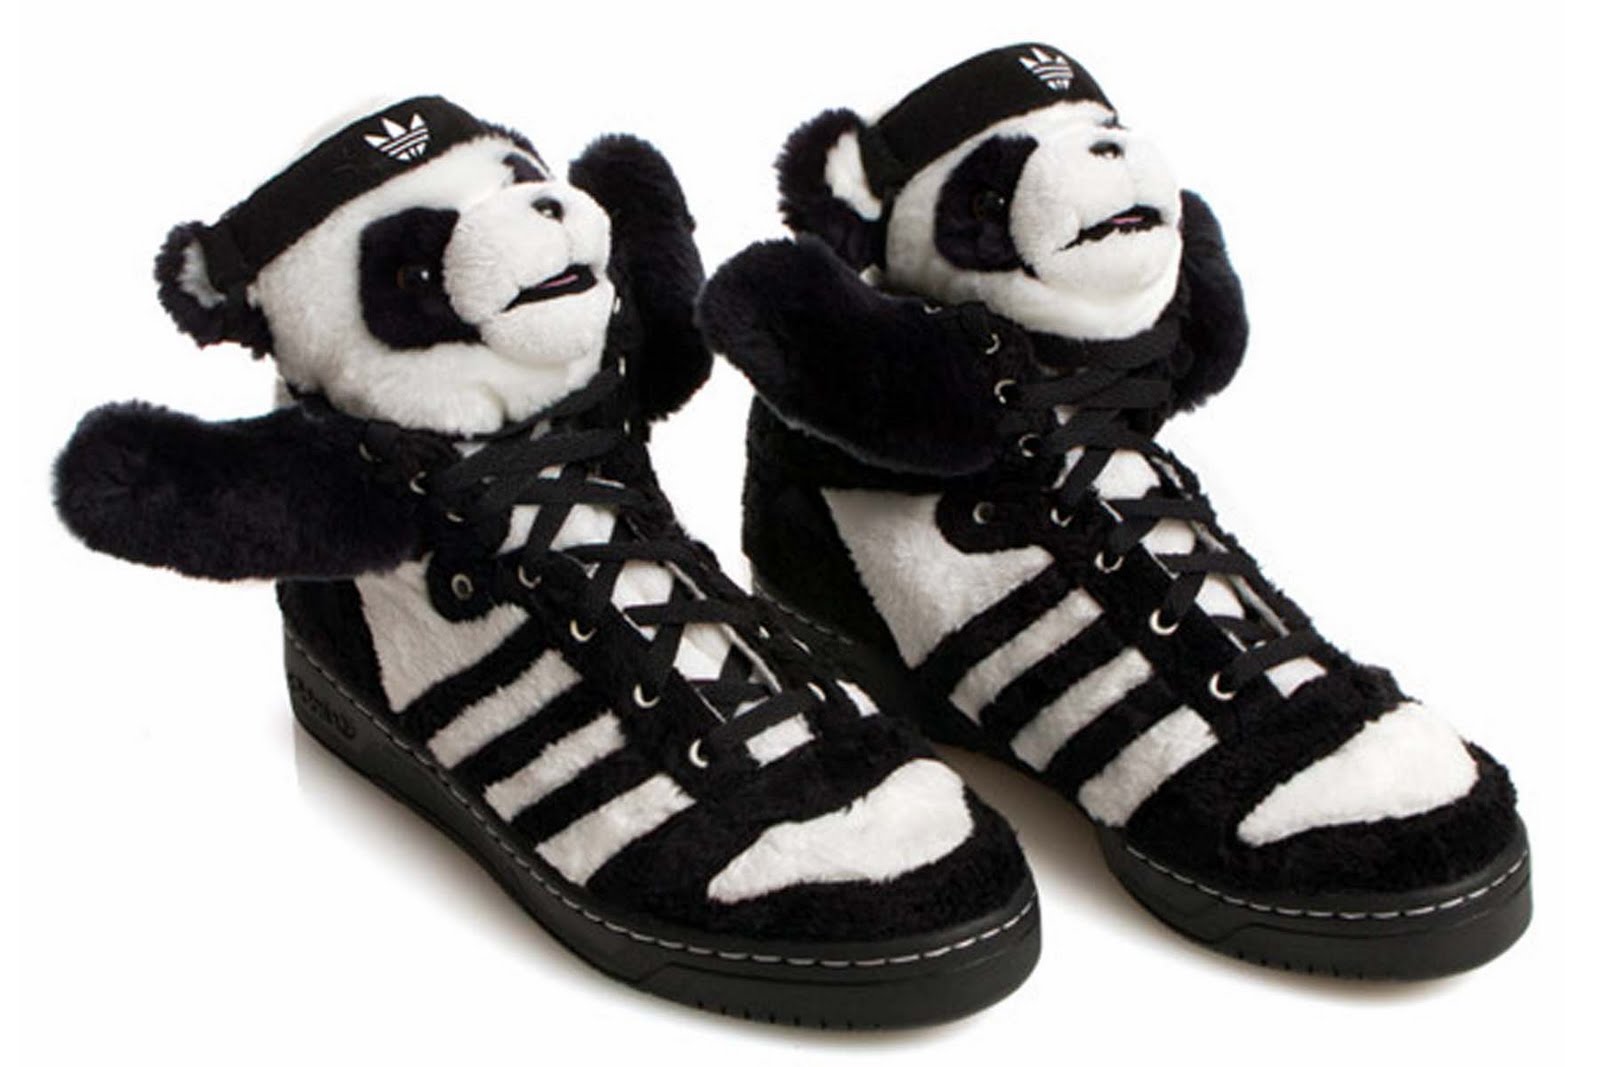 adidas stuffed animal shoes